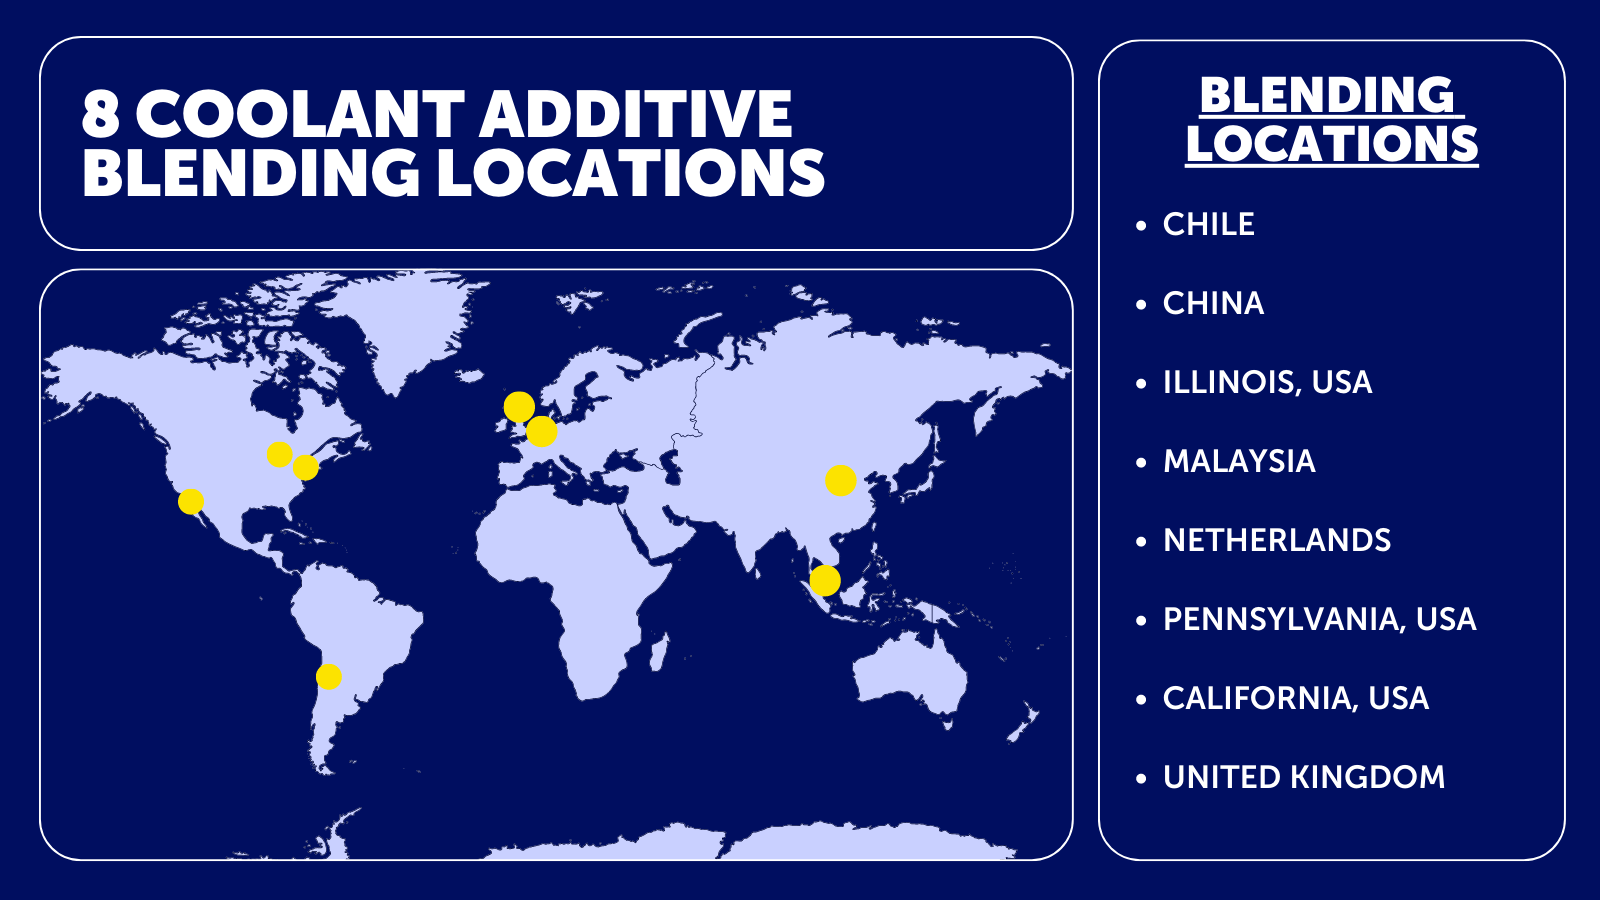 8 Coolant Additive Blending locations (1)